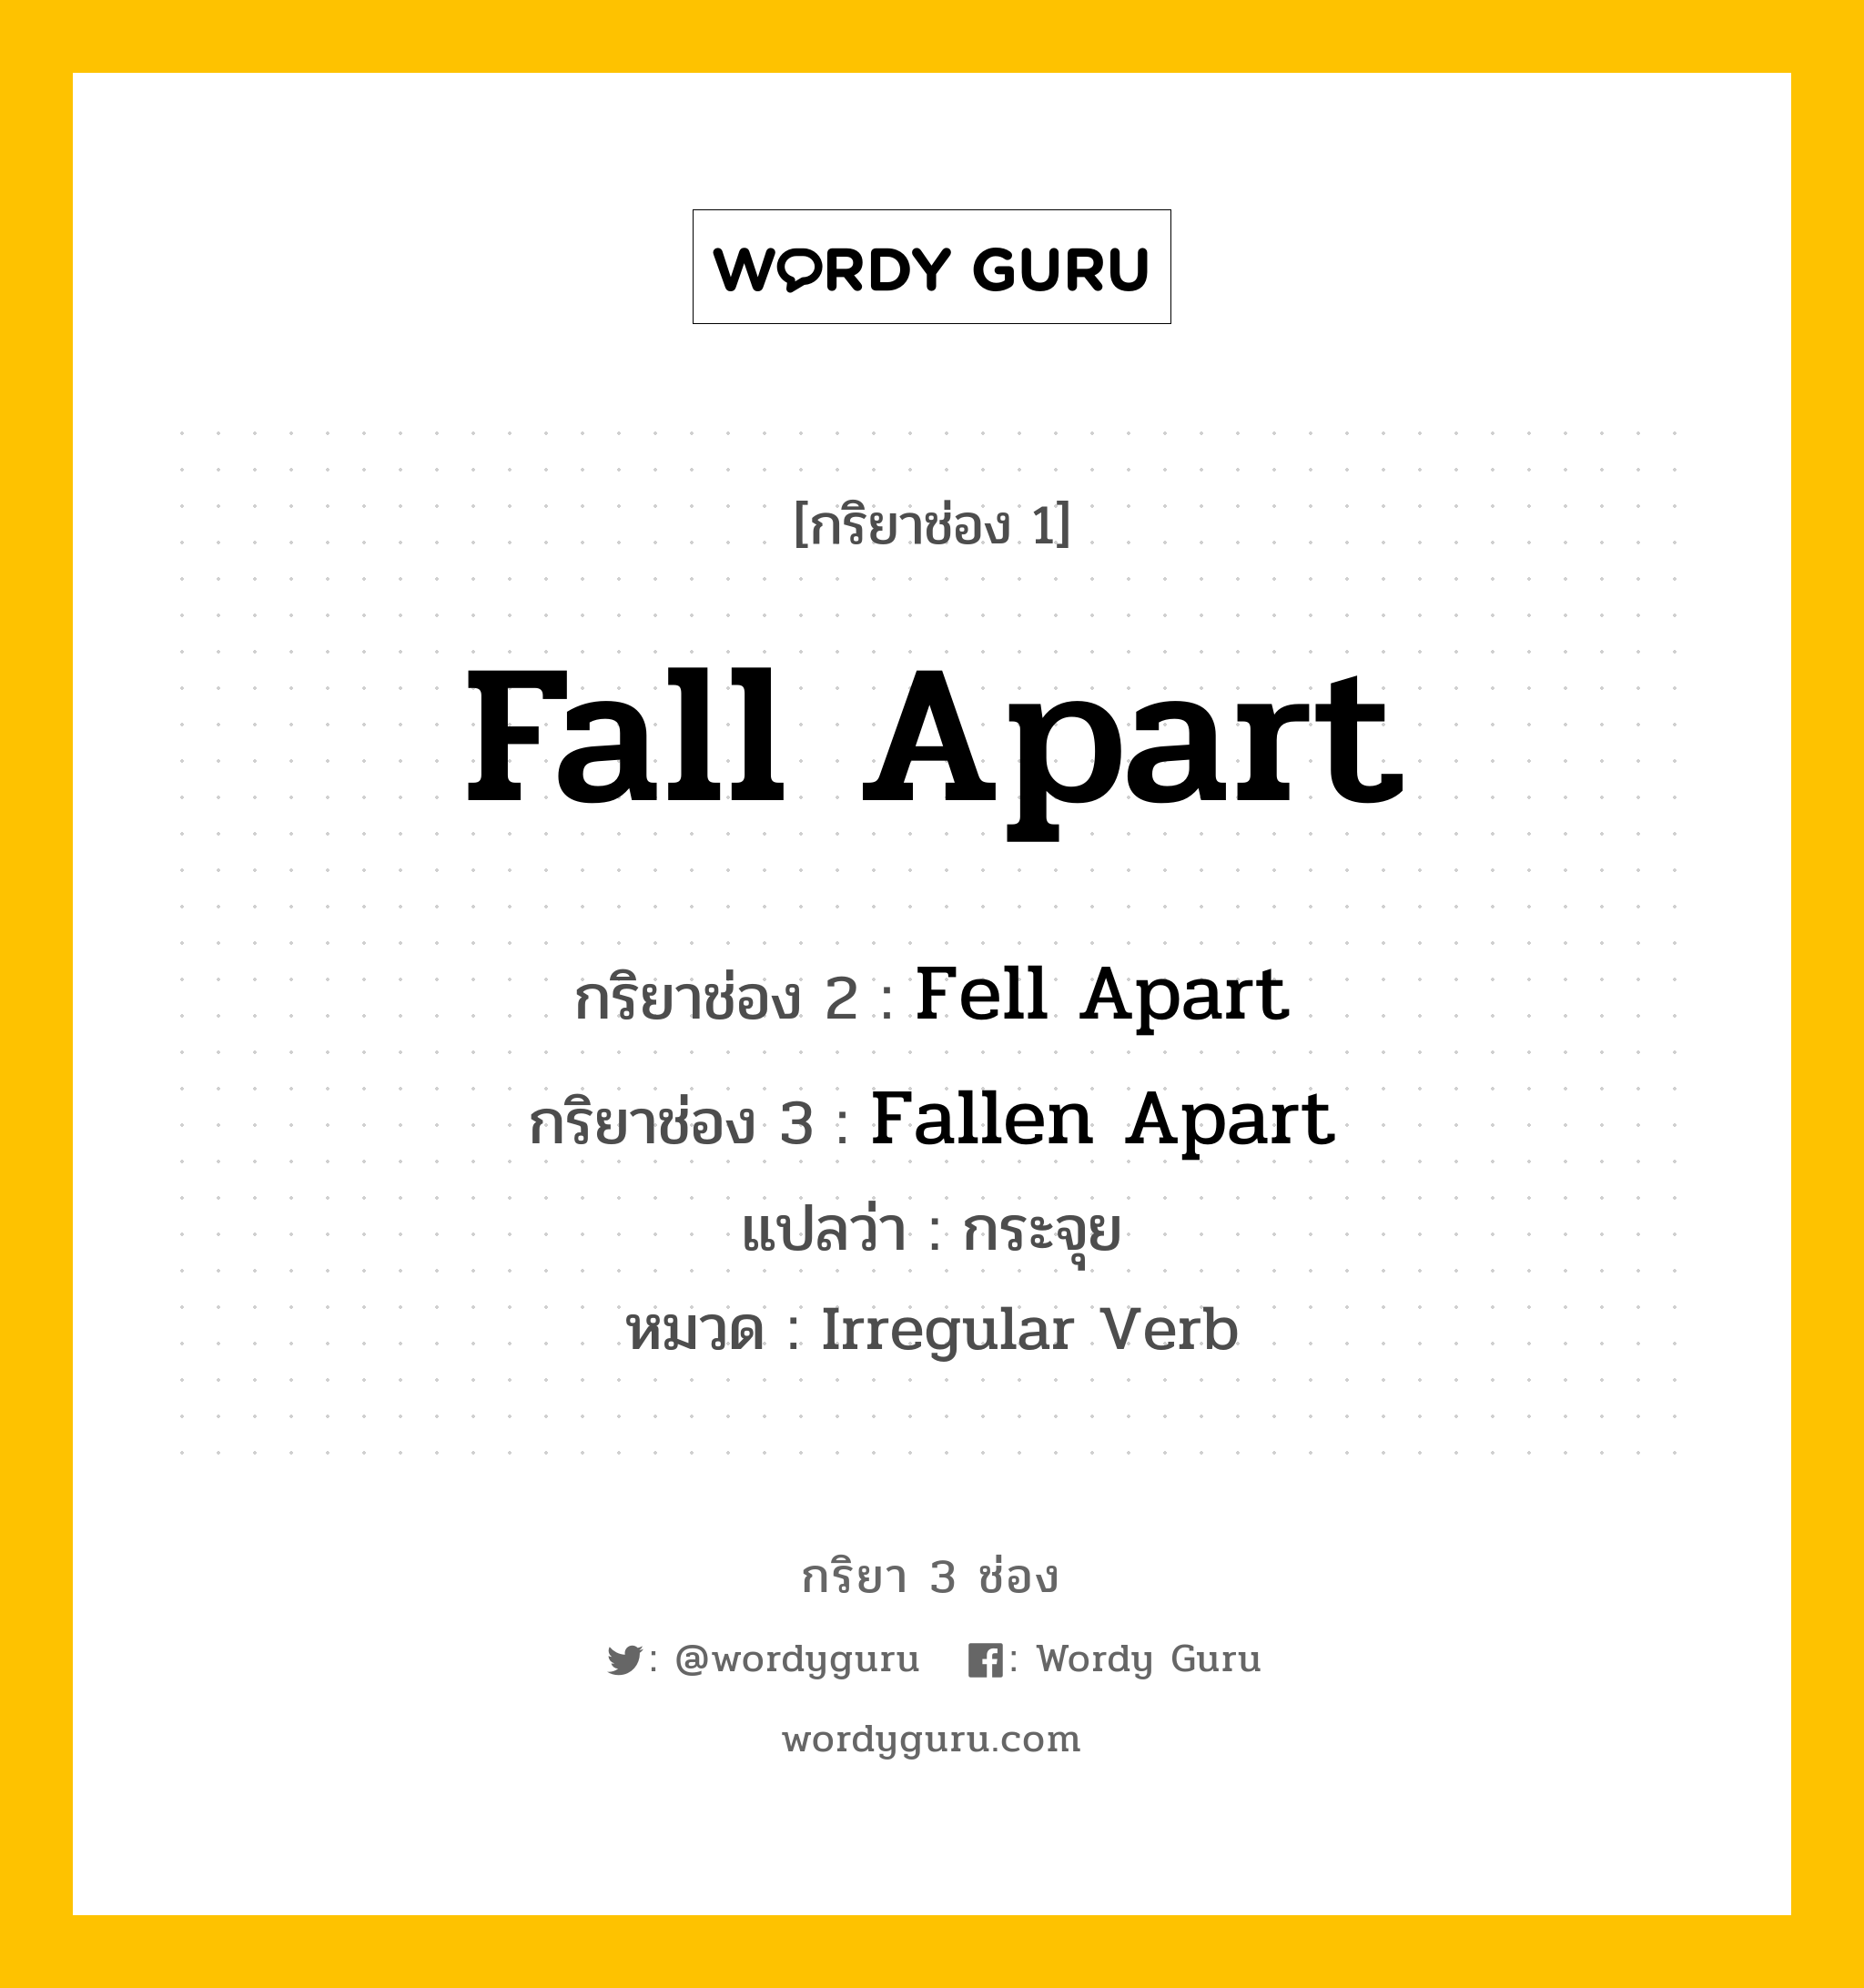 Fall Apart มีกริยา 3 ช่องอะไรบ้าง? คำศัพท์ในกลุ่มประเภท Irregular Verb, กริยาช่อง 1 Fall Apart กริยาช่อง 2 Fell Apart กริยาช่อง 3 Fallen Apart แปลว่า กระจุย หมวด Irregular Verb หมวด Irregular Verb